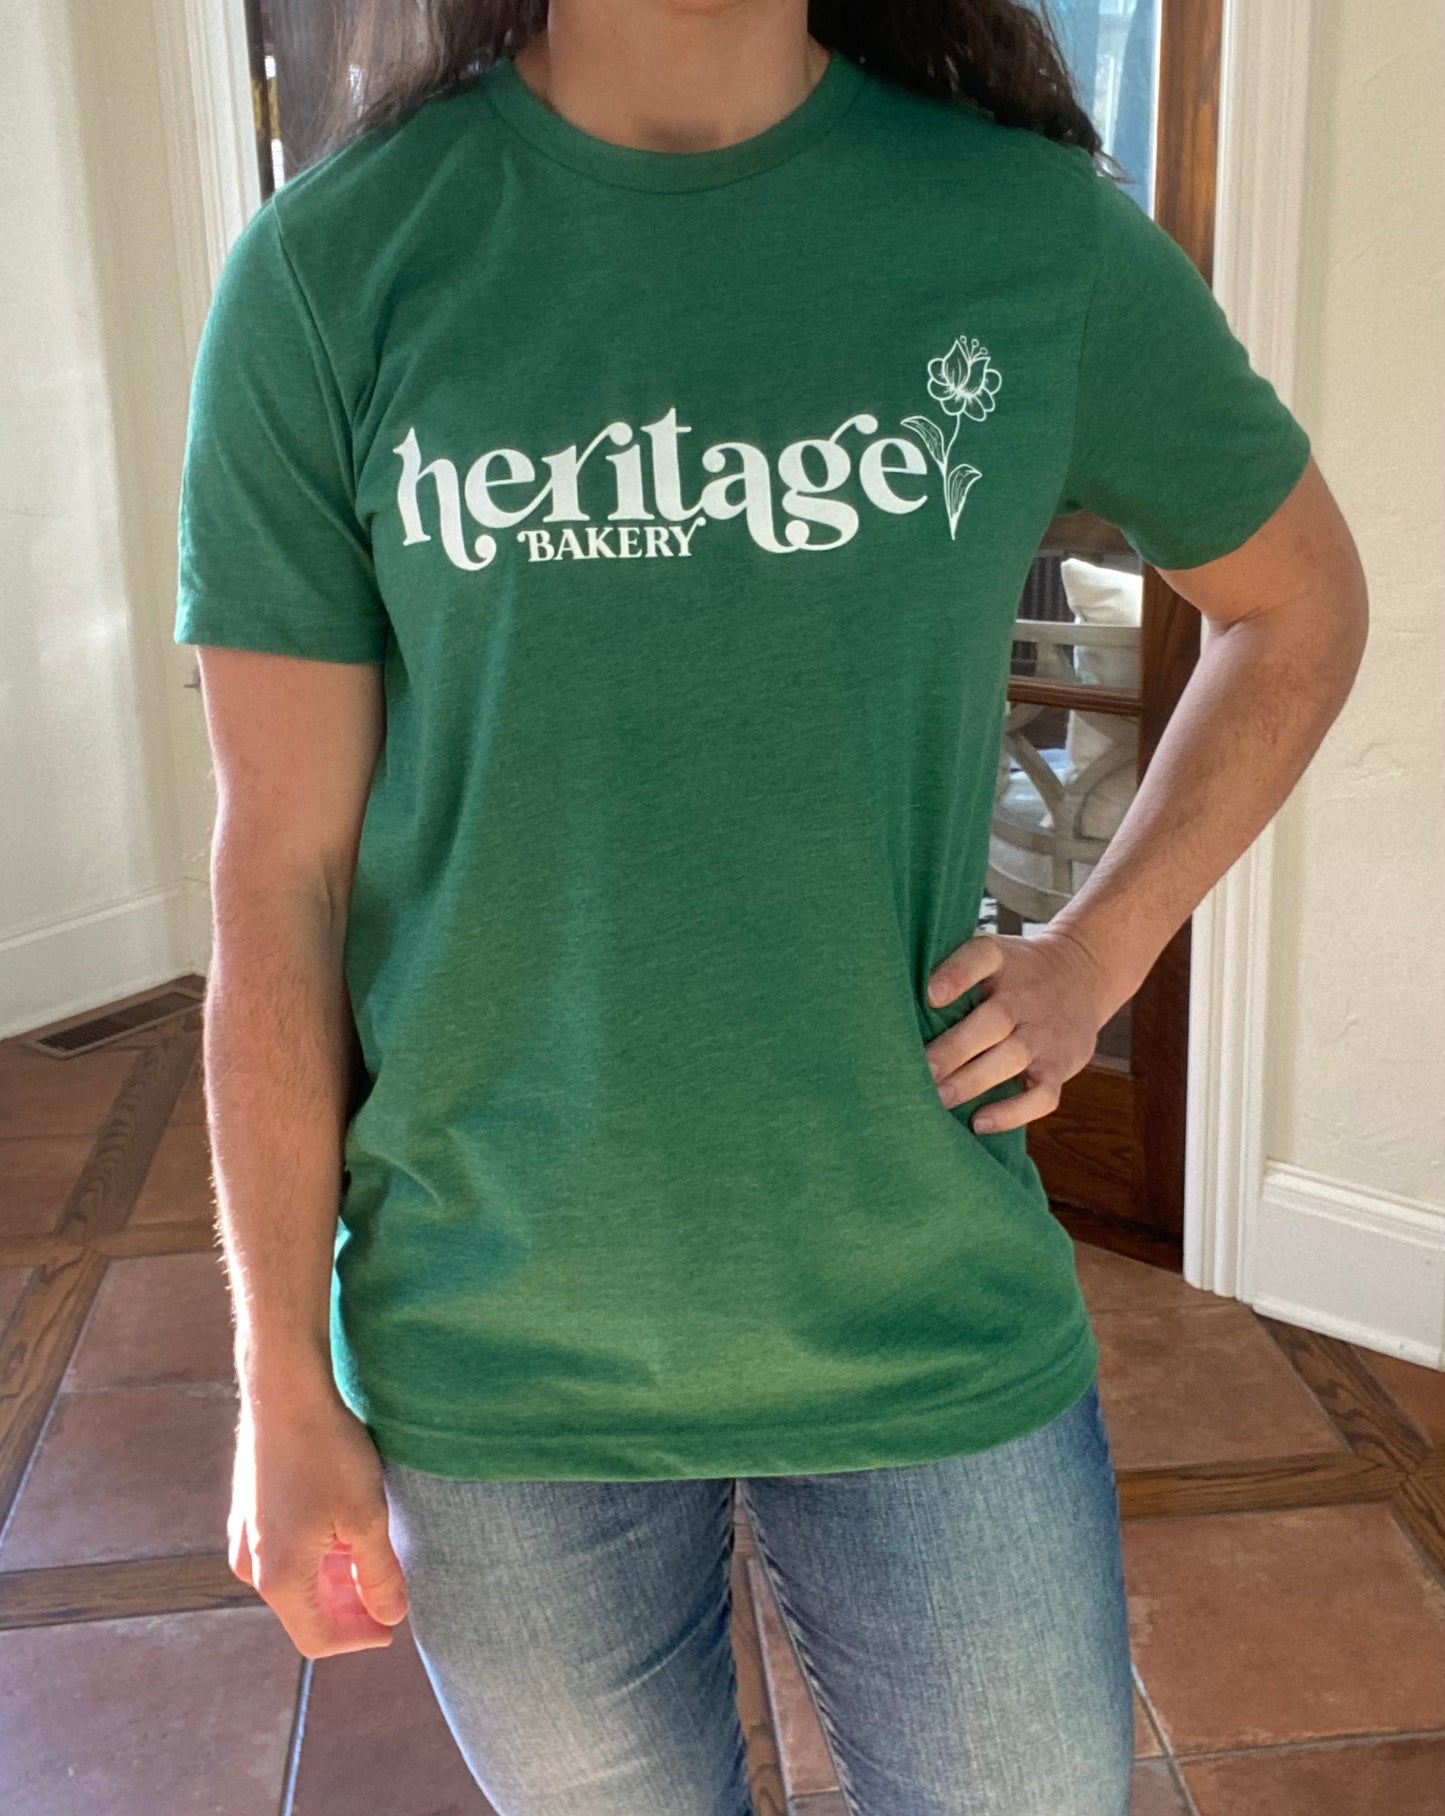 Heritage Shirt